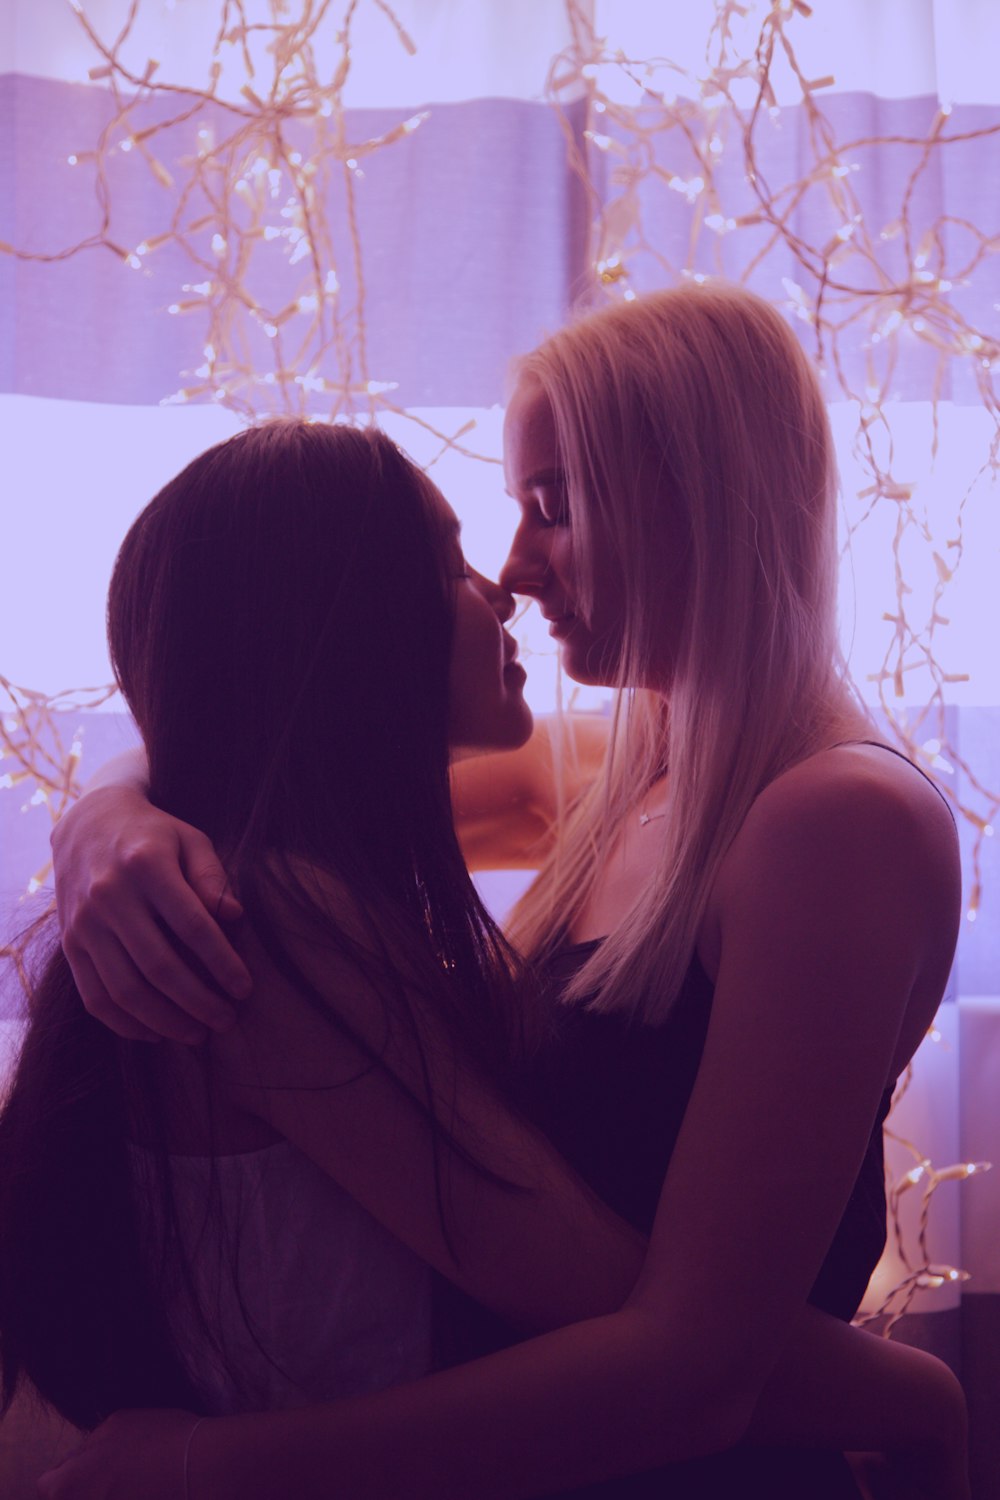 500+ Lesbian Girl Pictures | Download Free Images on Unsplash